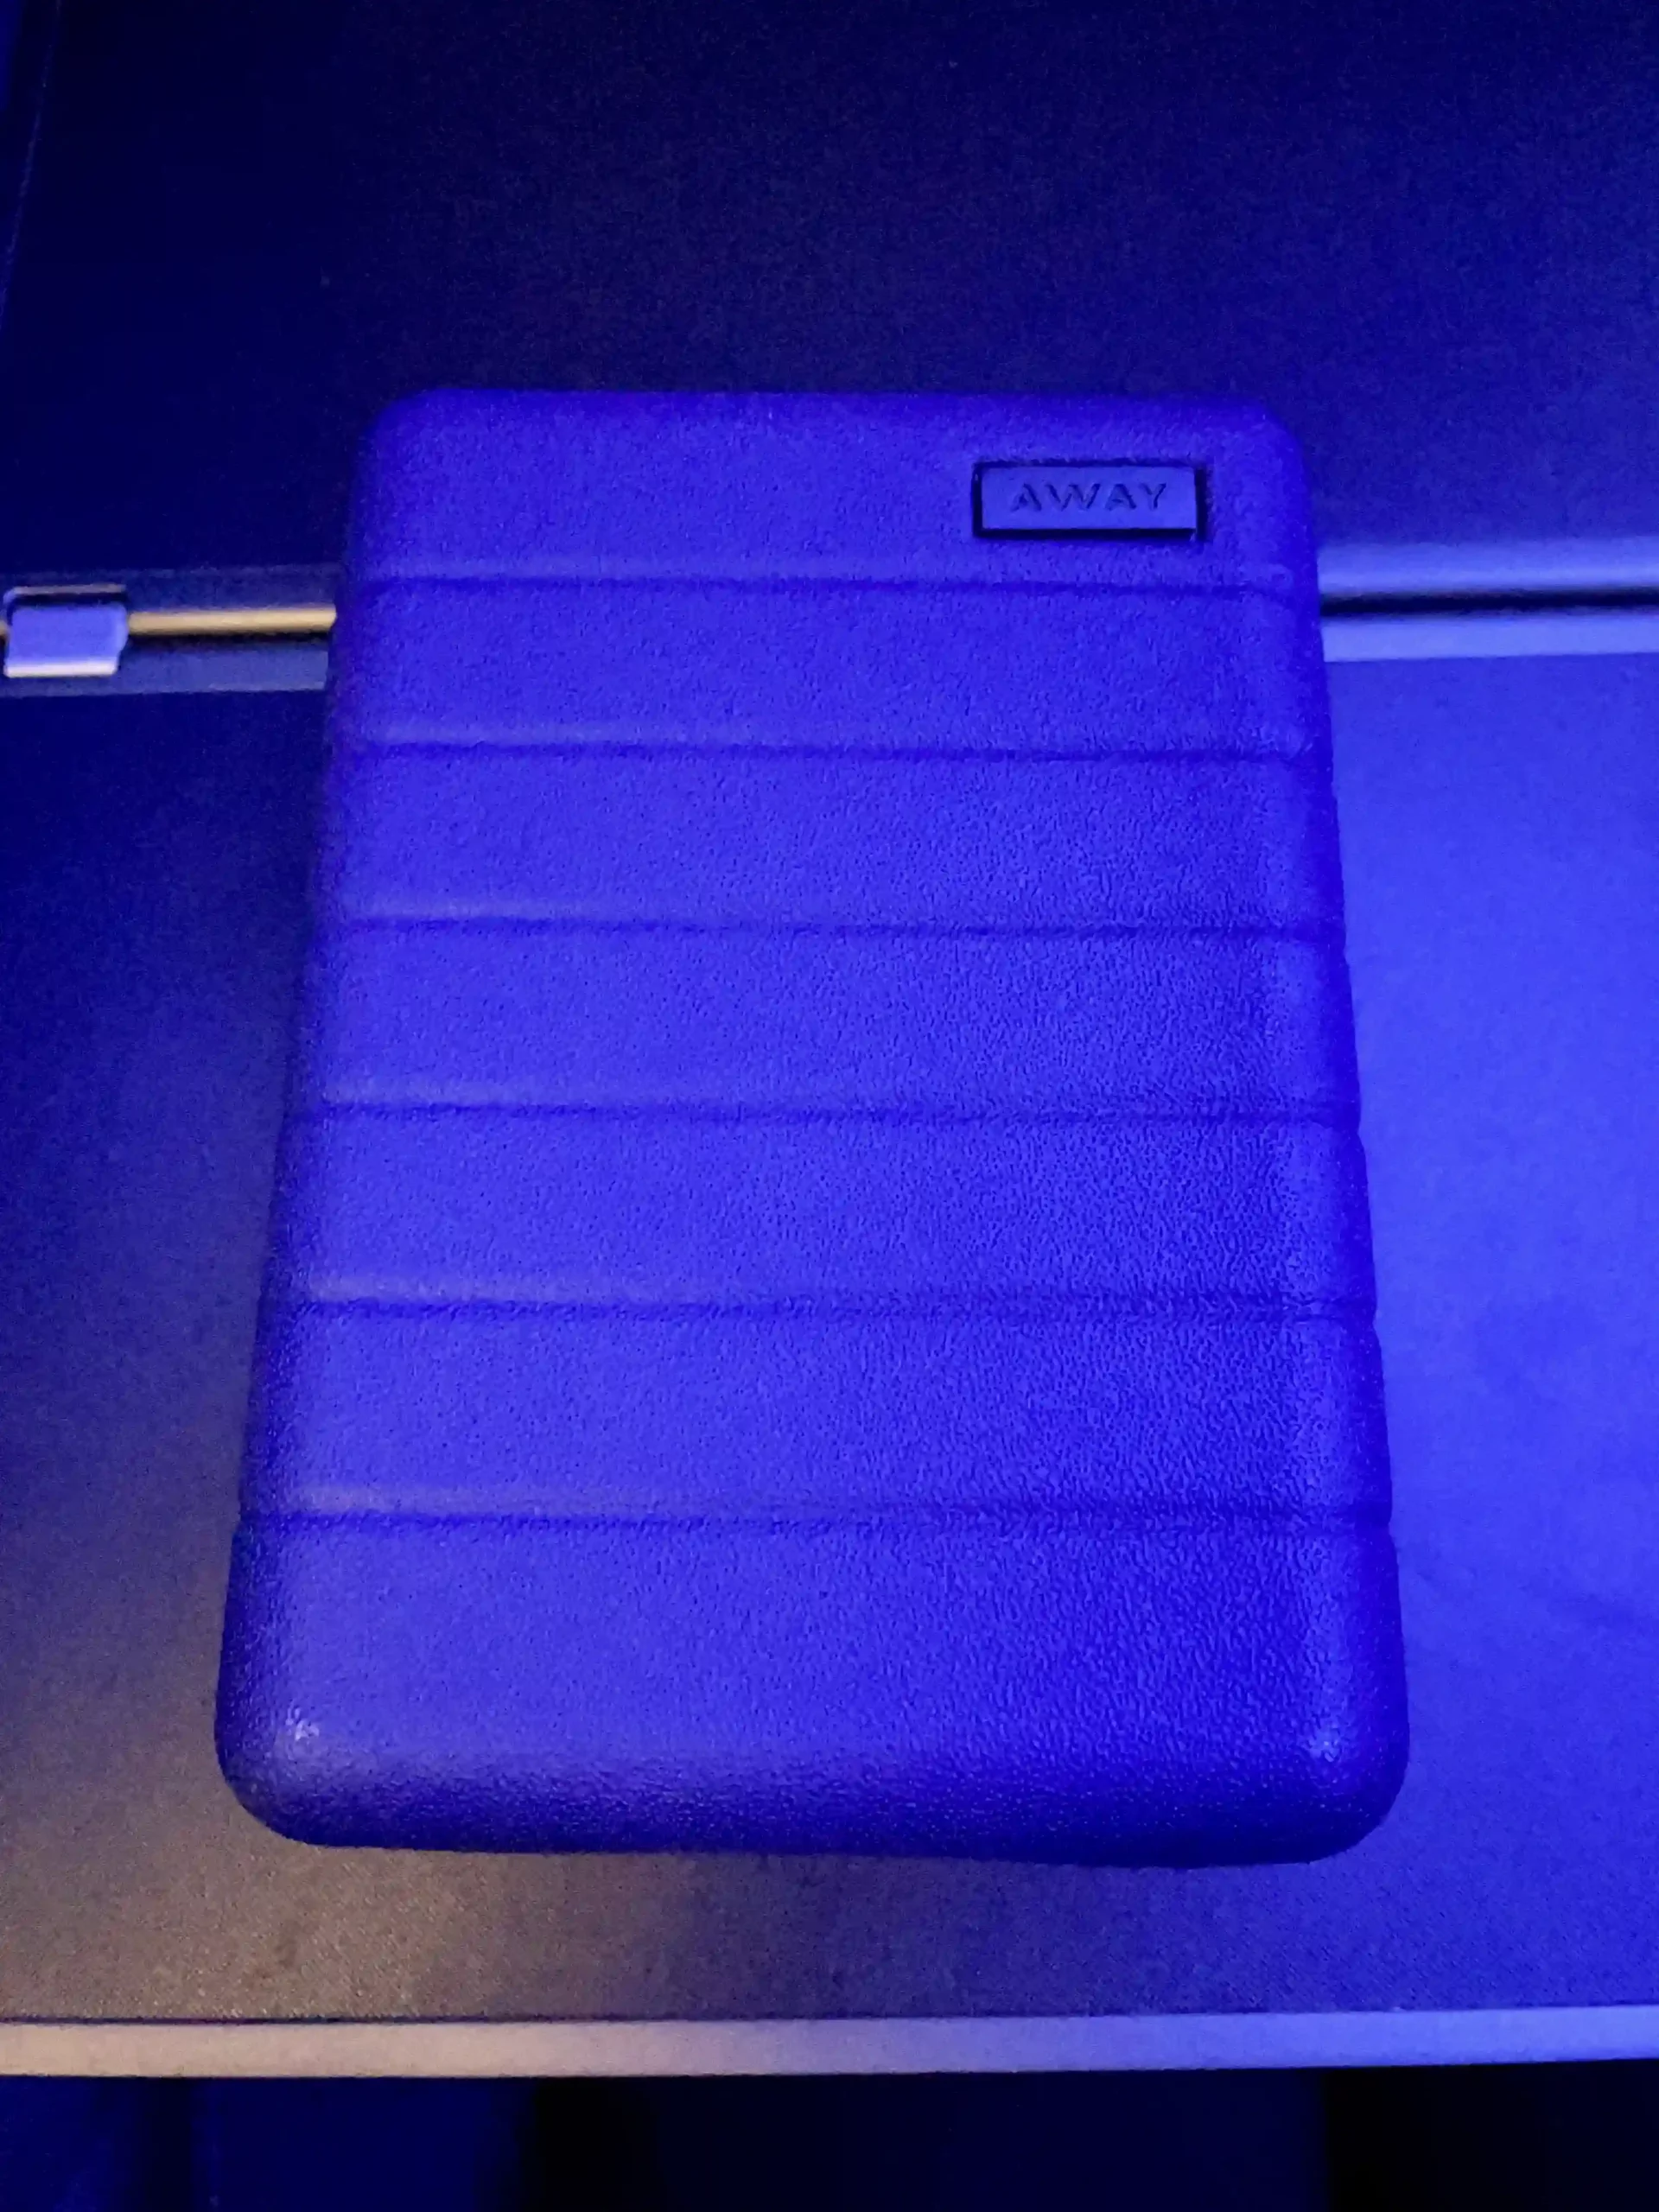 a blue plastic case on a blue surface